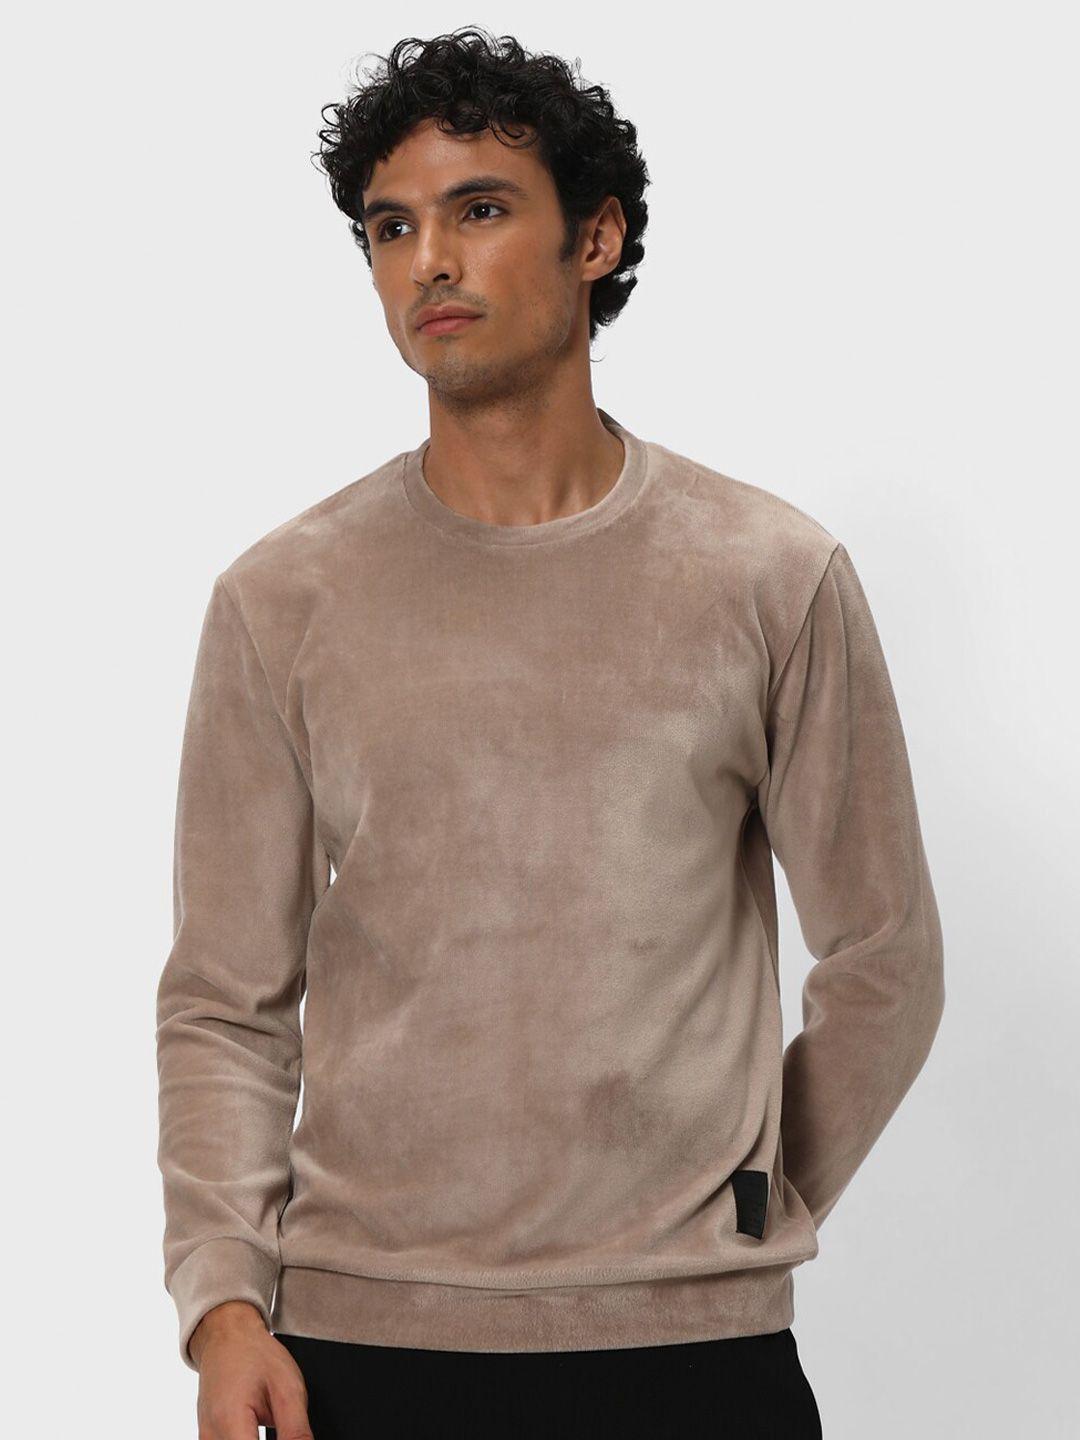 mufti-round-neck-long-sleeves-pullover-sweatshirt